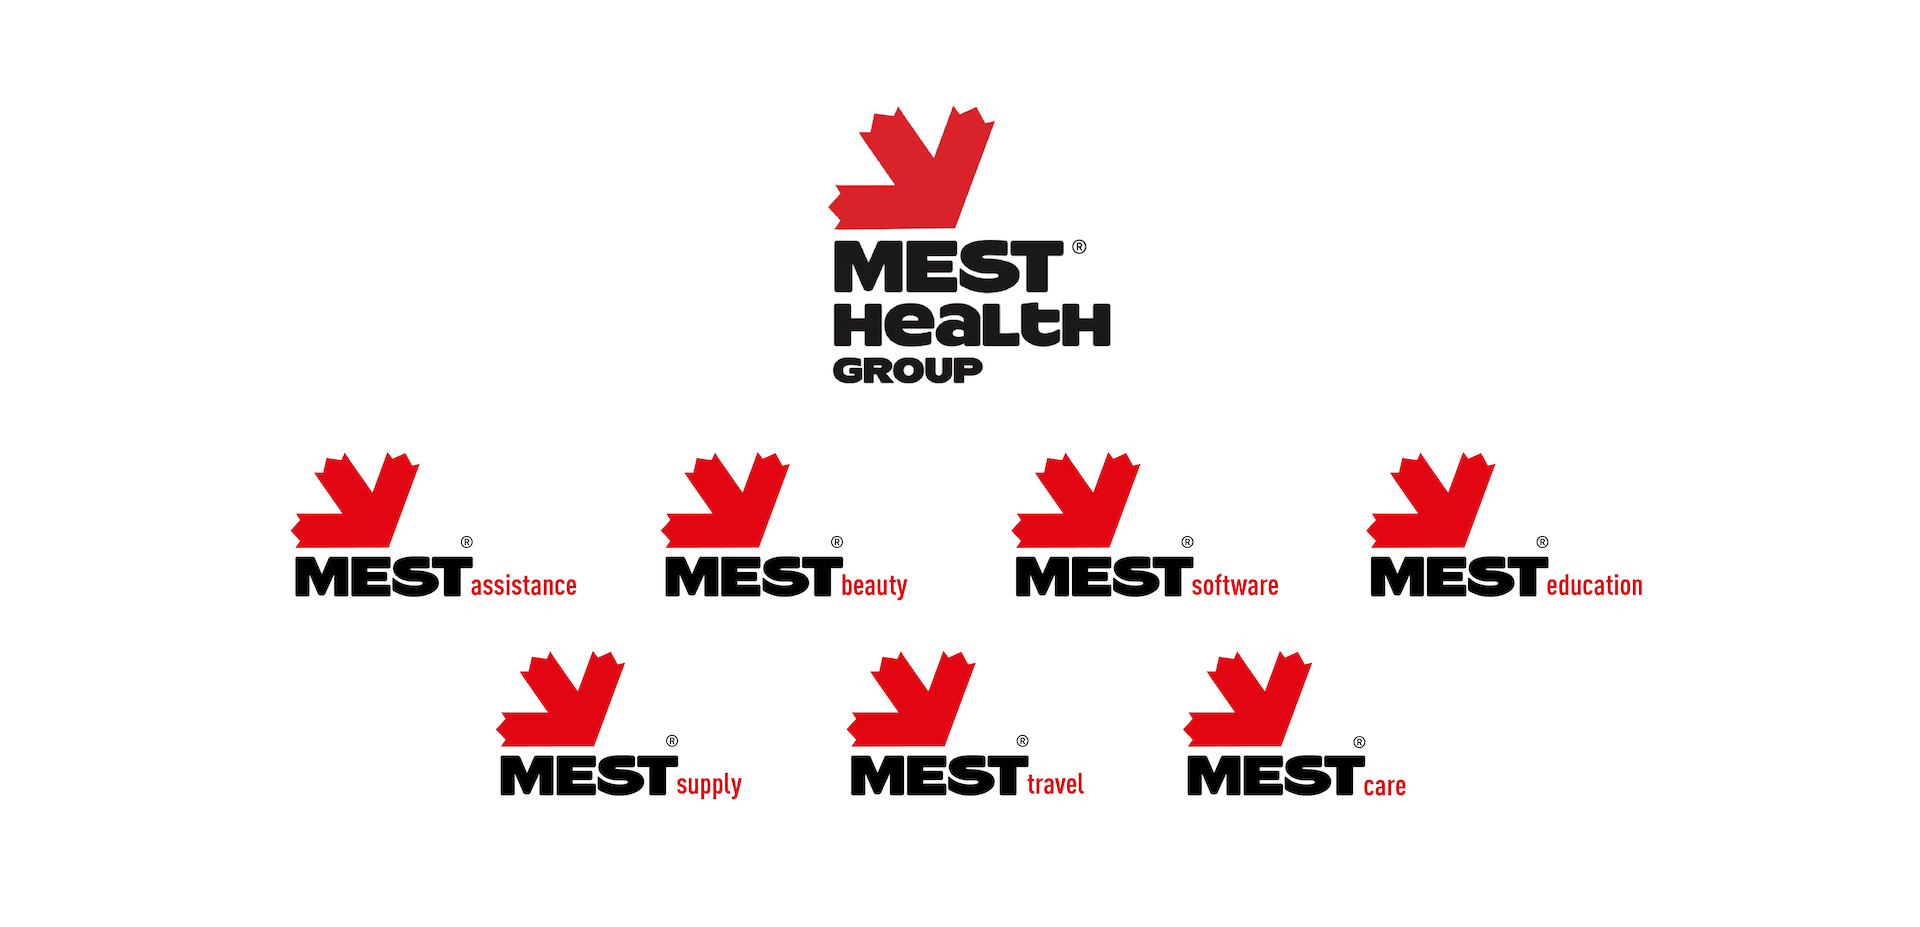 Mest Group - KONSEPTIZ Advertising Agency in Turkey